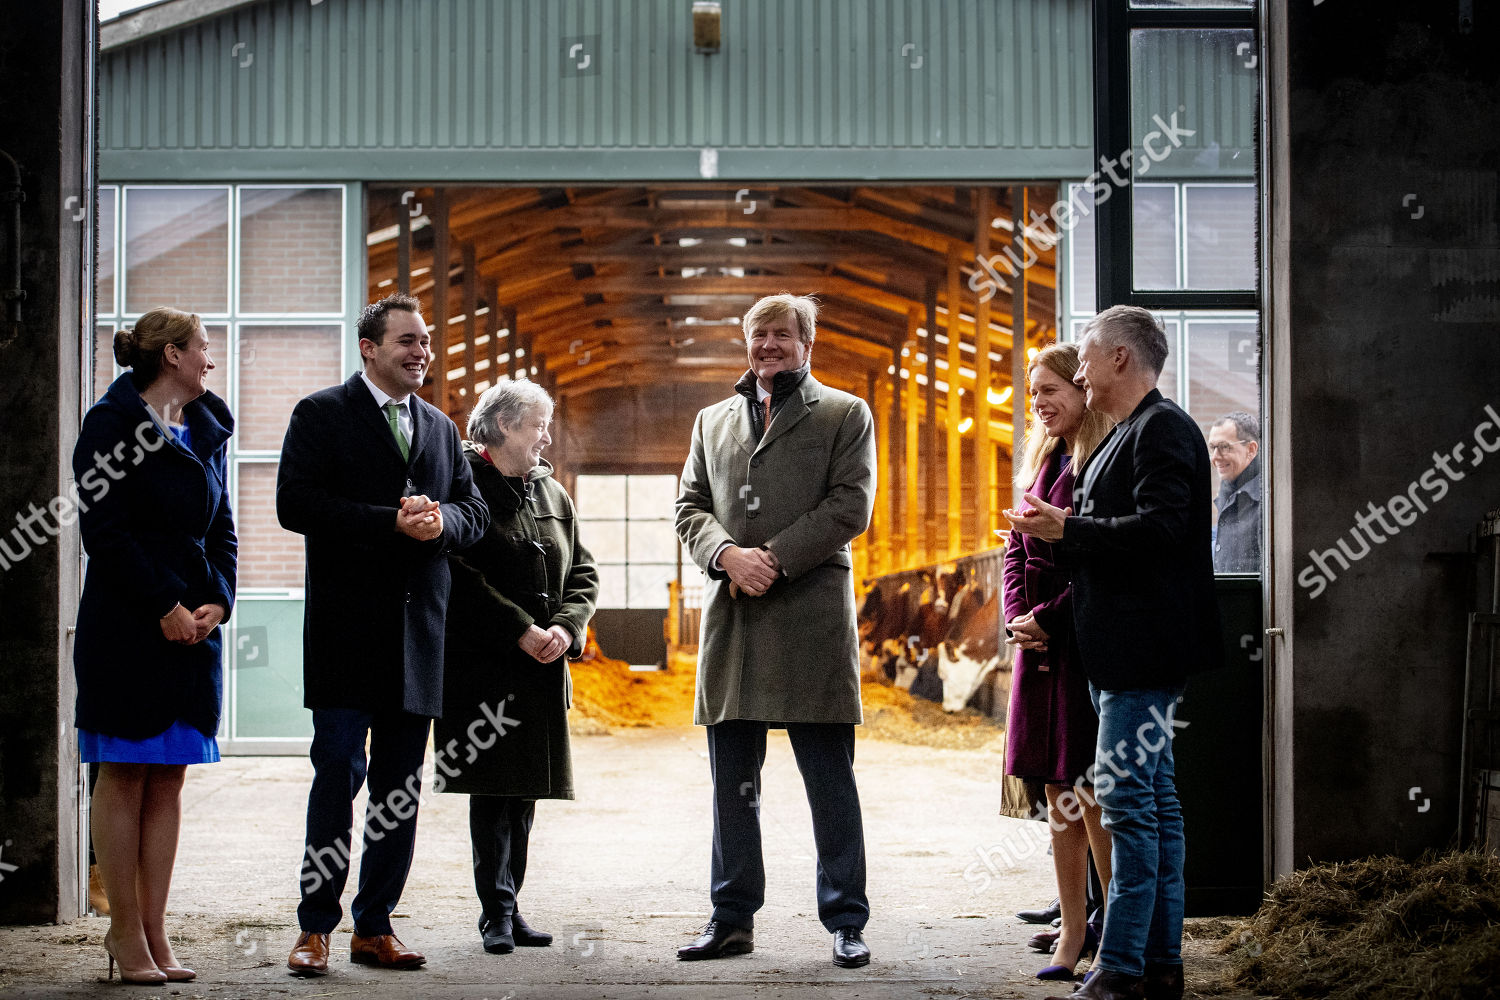 visit-to-dairy-farm-groot-steinfort-joppe-netherlands-shutterstock-editorial-9996881bw.jpg